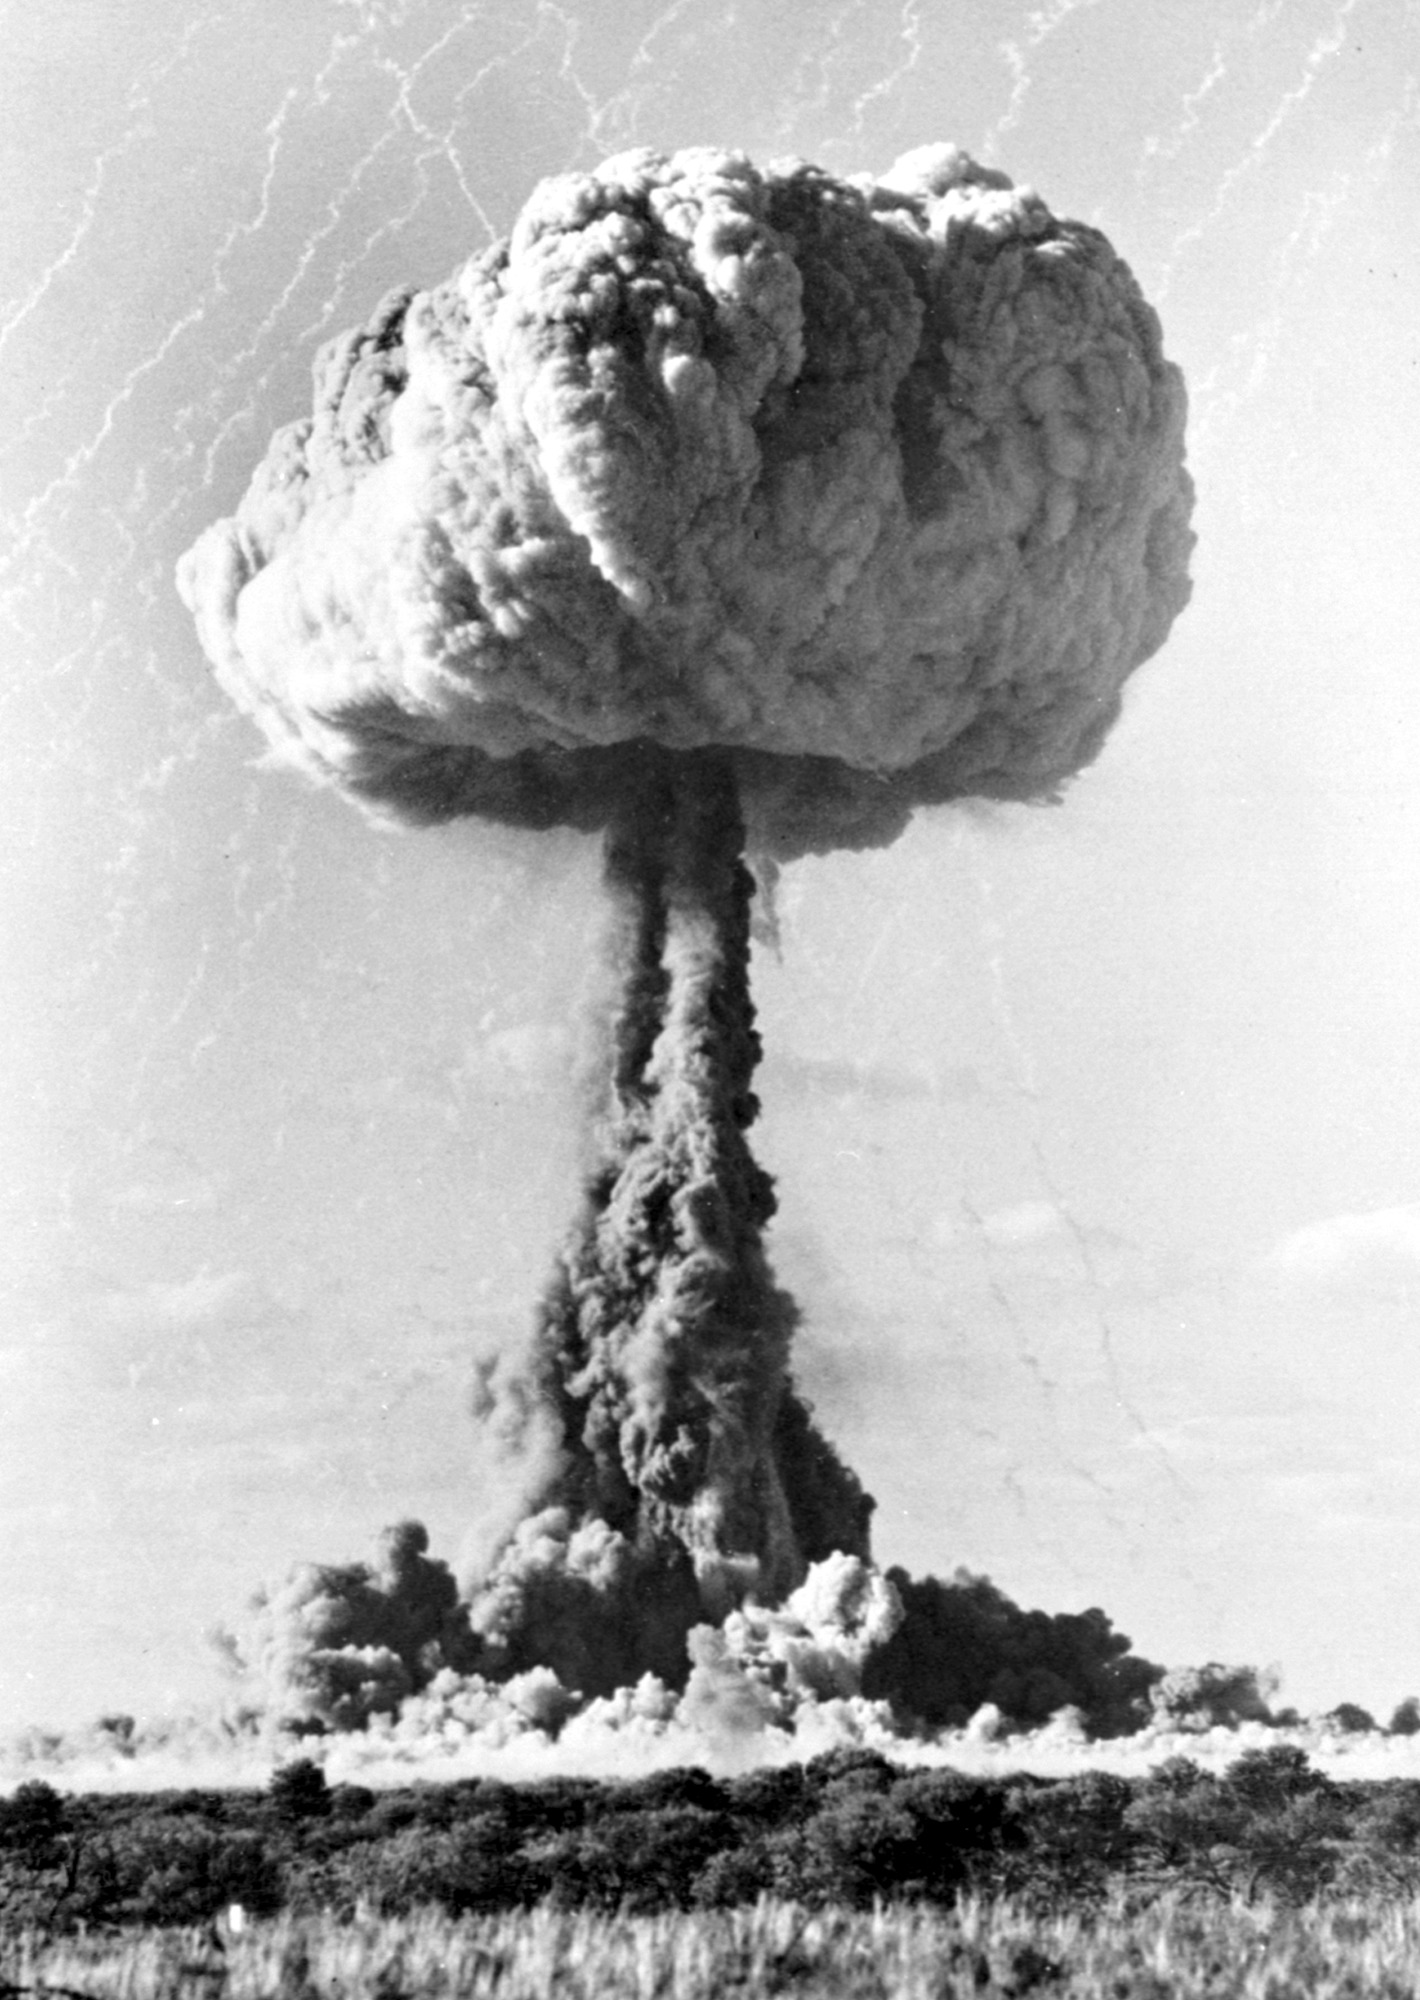 Atomic blast during Operation Buffalo nuclear tests, Maralinga, South Australia